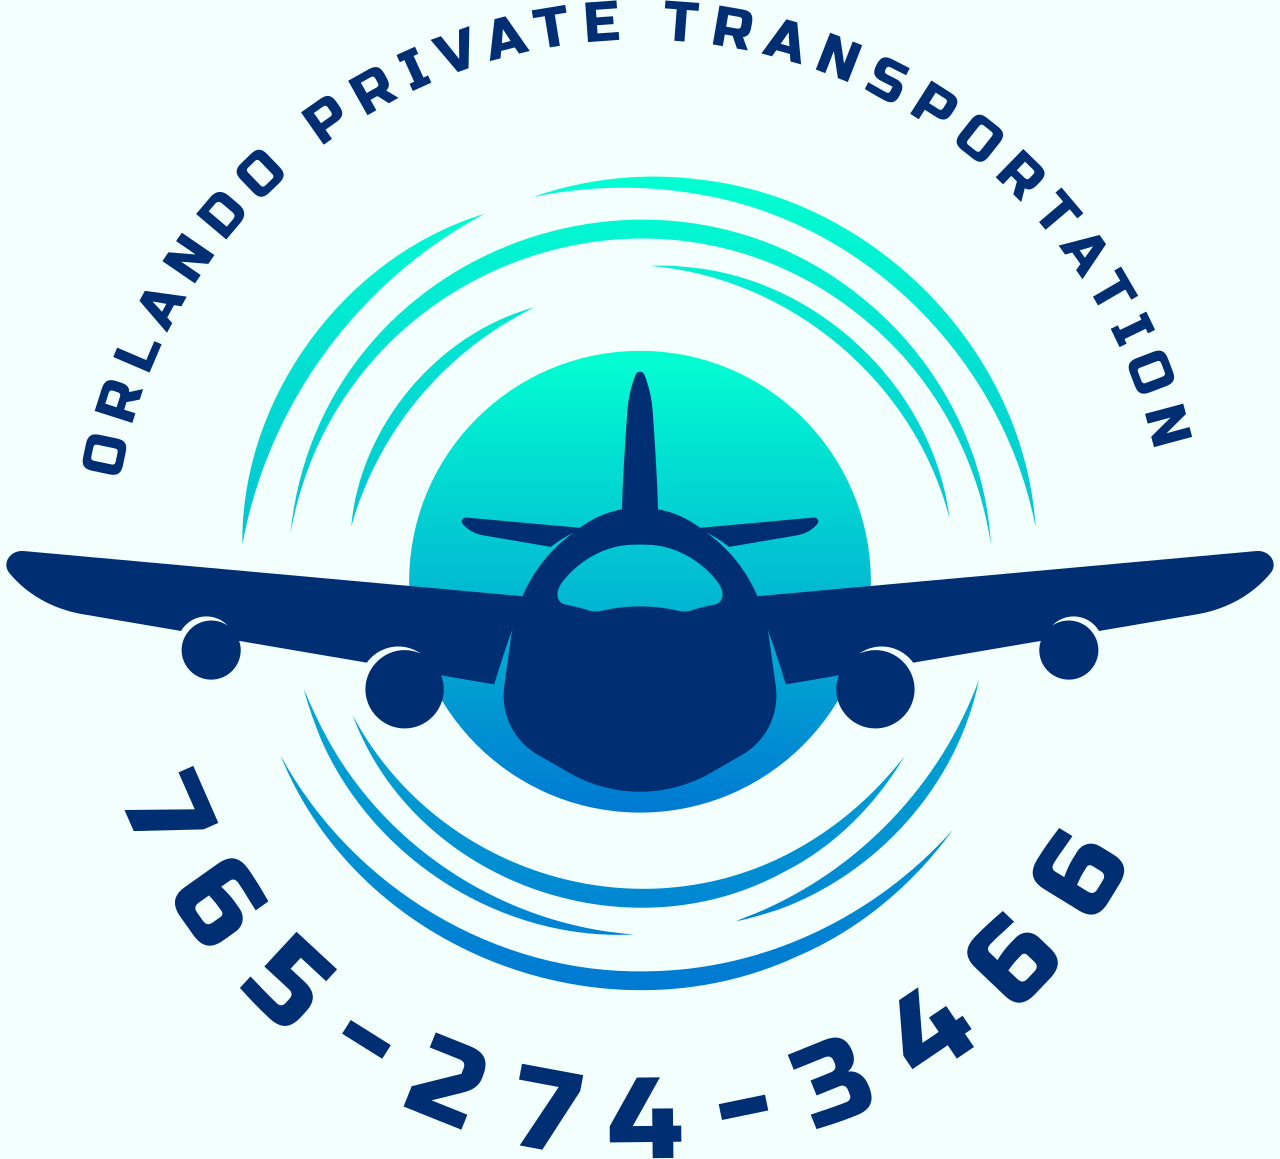 ORLANDO PRIVATE TRANSPORTATION 's web page